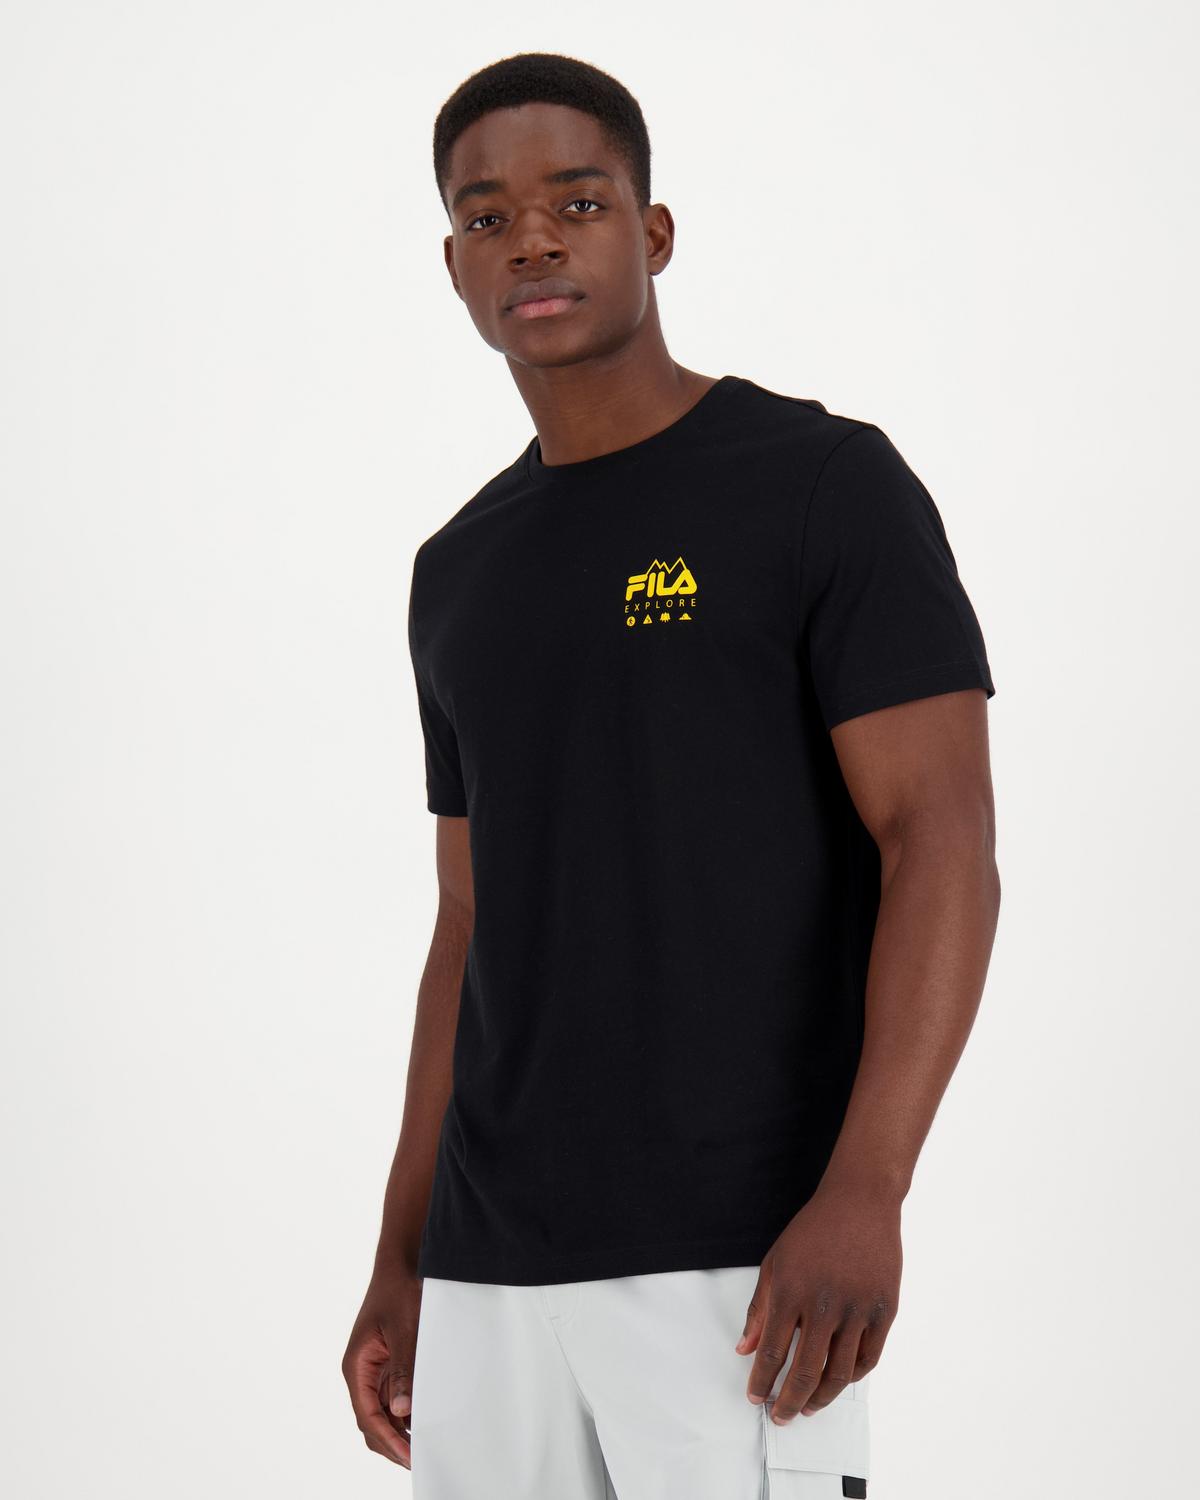 FILA Sinai T-Shirt Mens -  Black